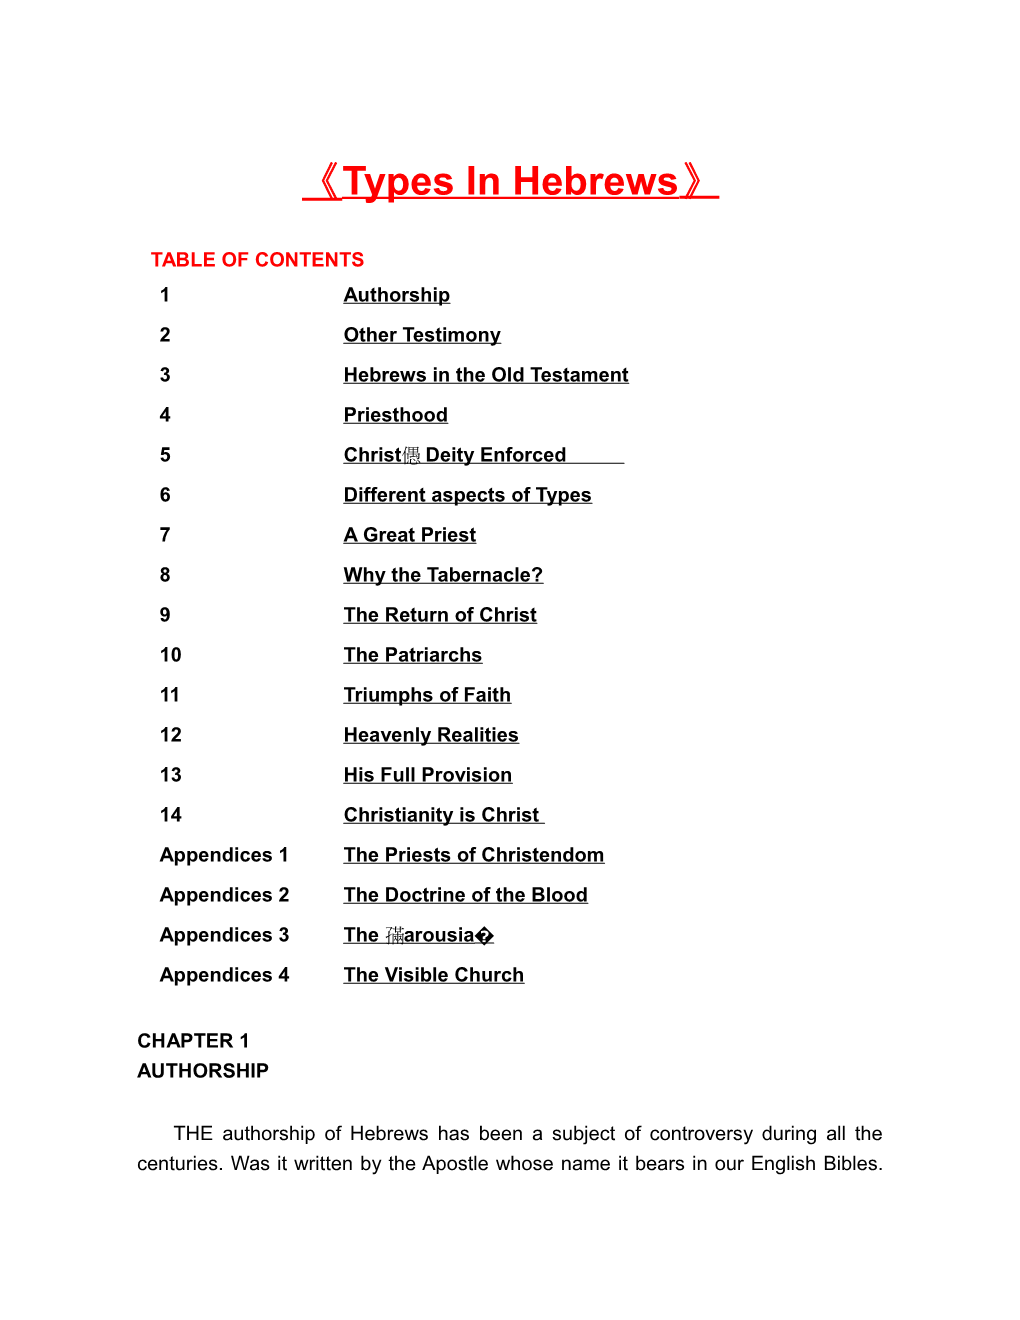 Types in Hebrews